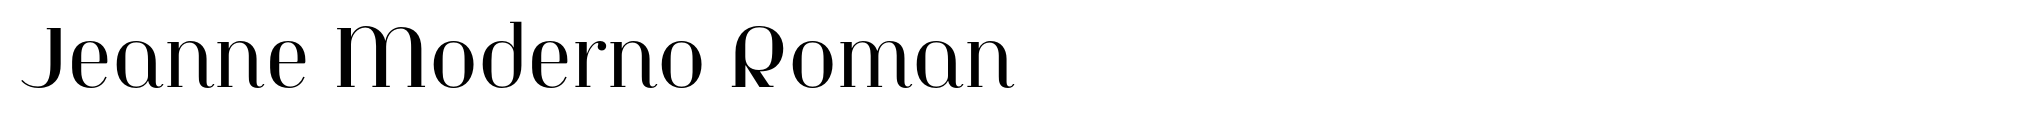 Jeanne Moderno Roman image